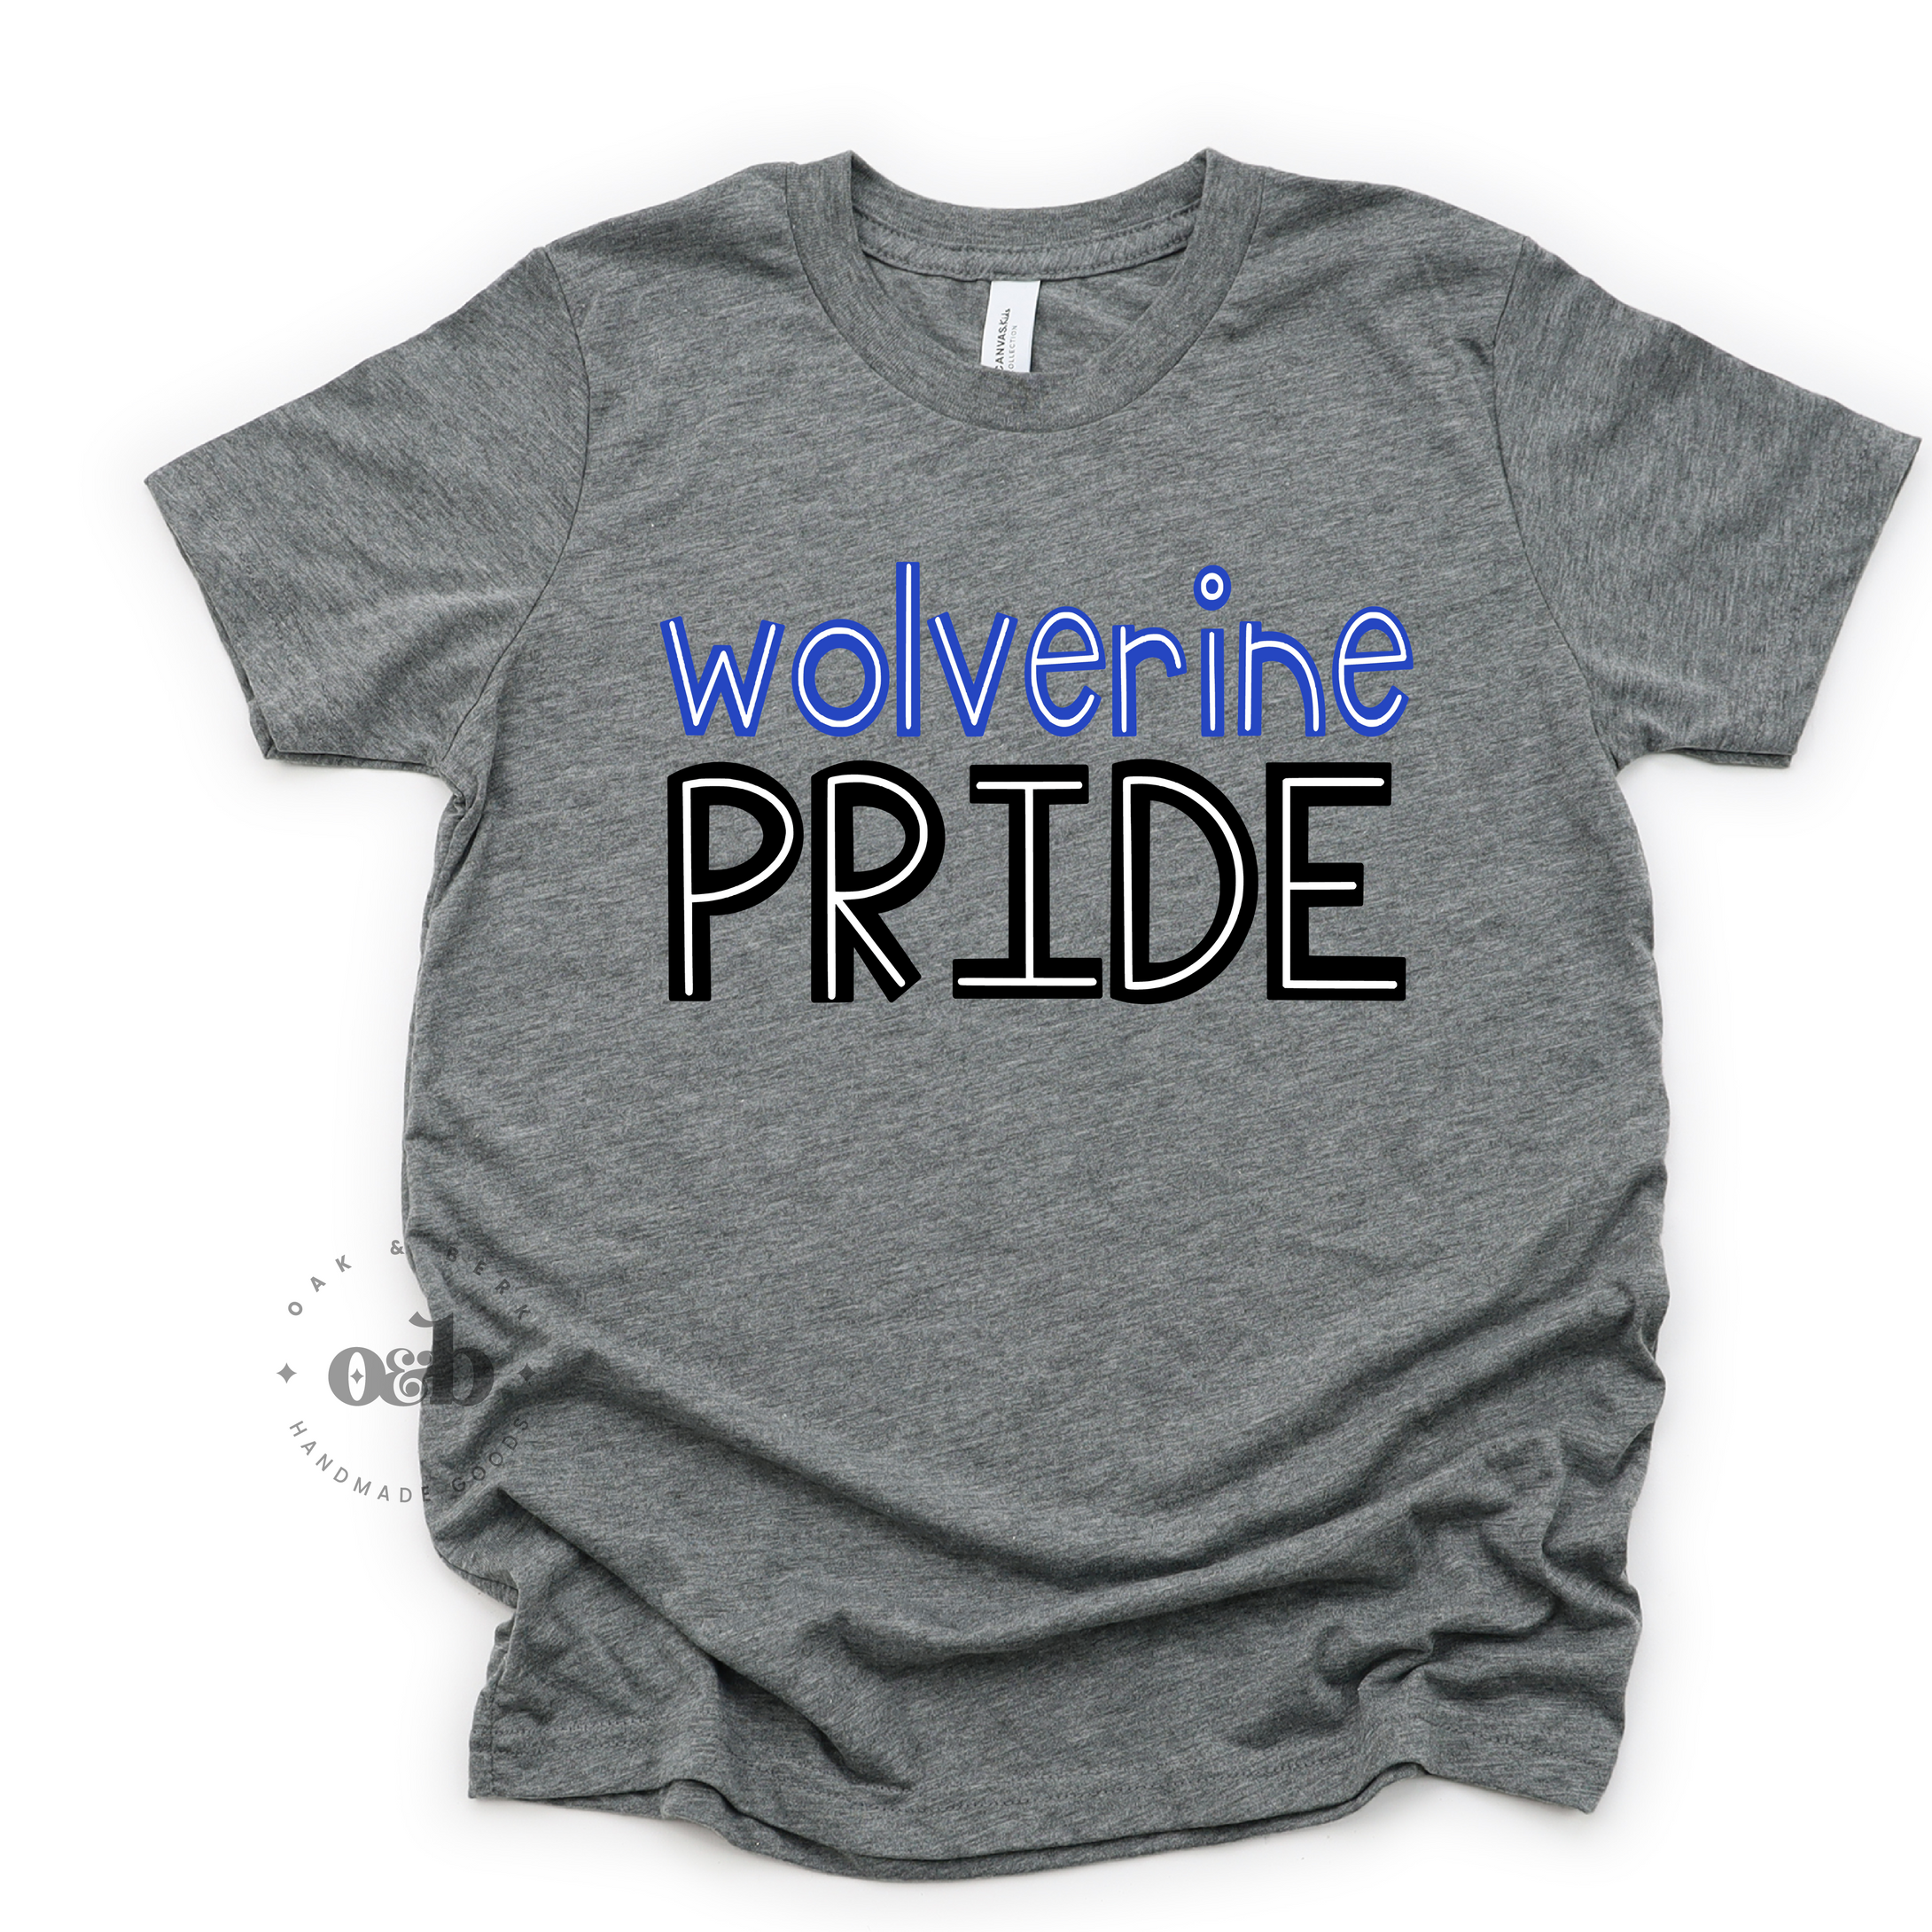 MTO / Wolverine Pride, youth